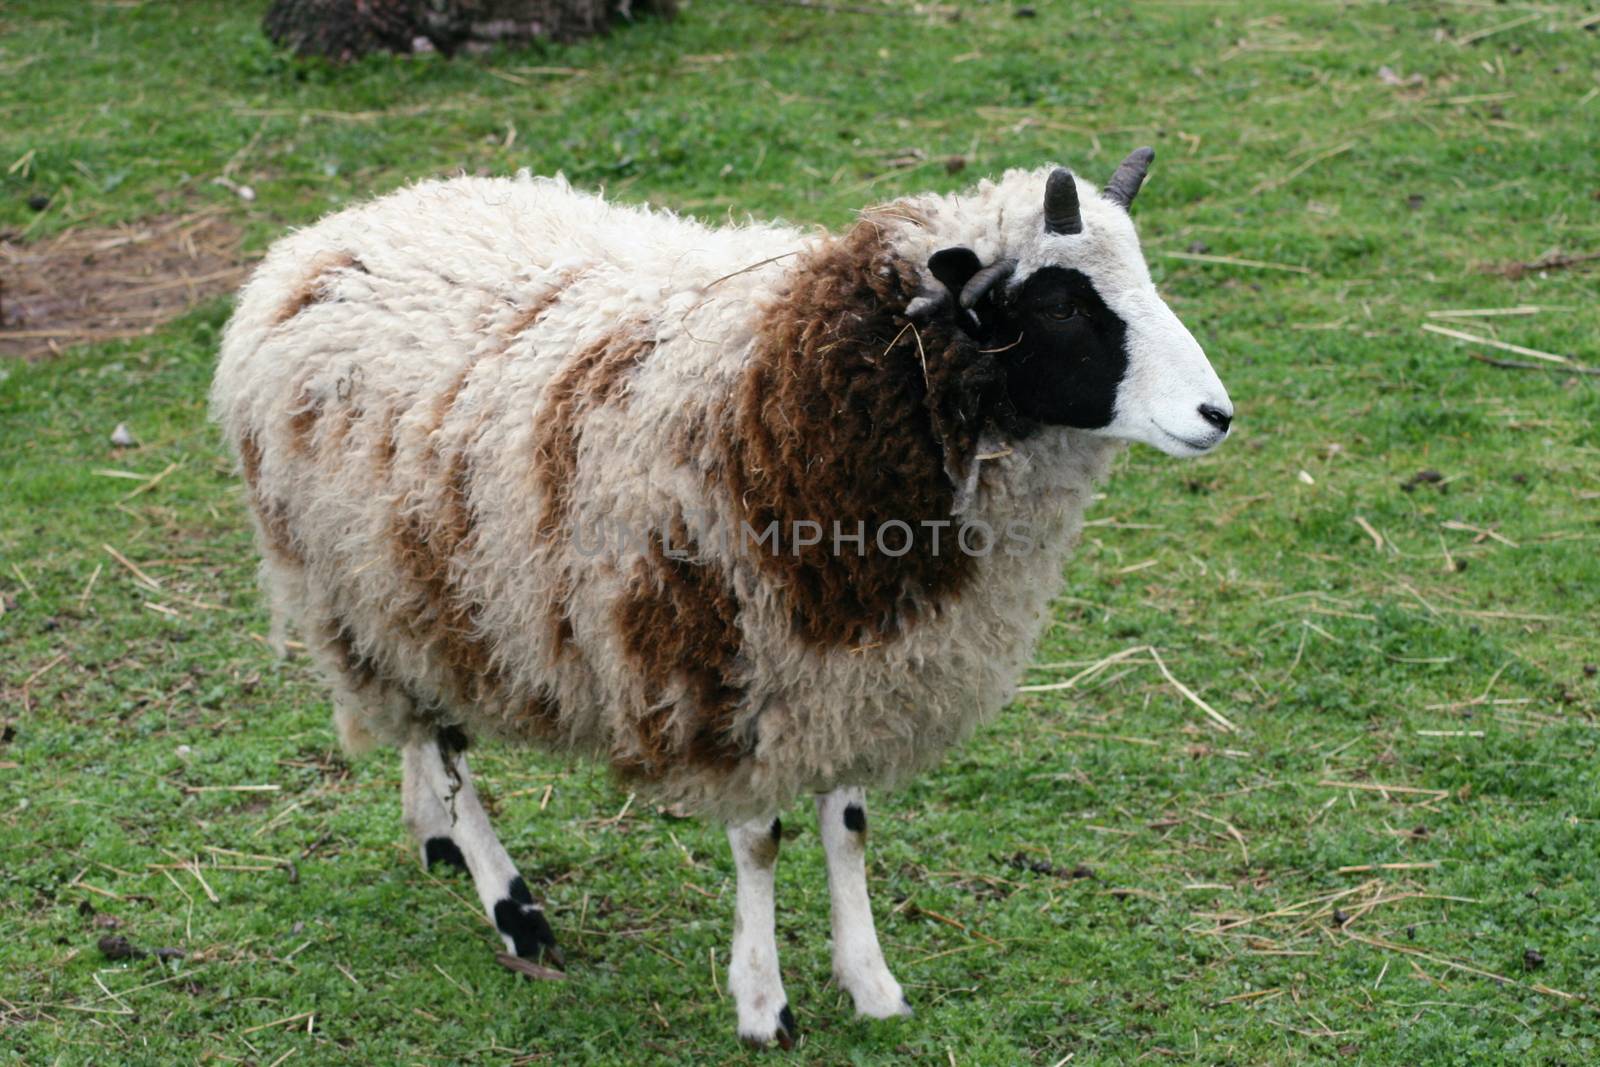 An Adolescent four horn sheep on a green field  Ein Halbw�chsiges Vierhornschaf,auf gr�ner Wiese by hadot